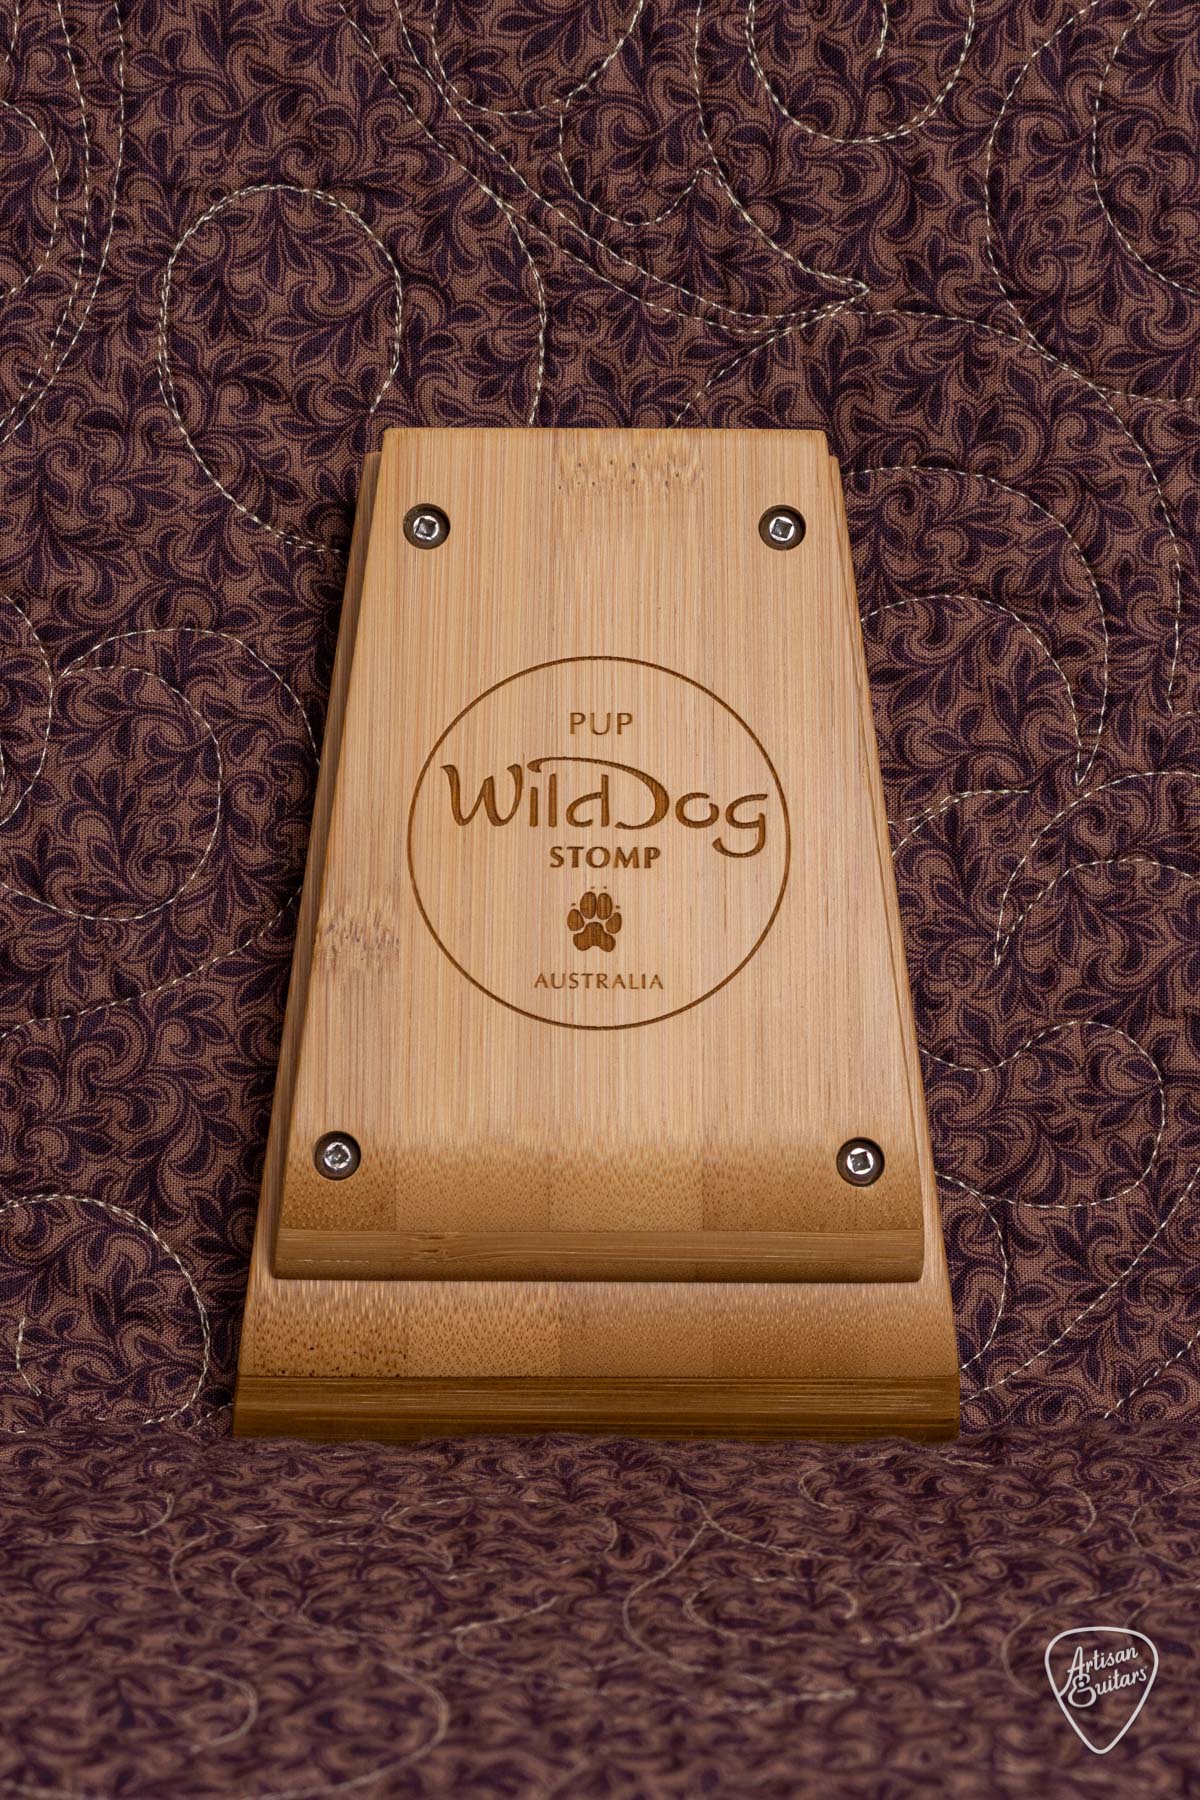 Wild Dog Pup Stomp Box - WD-261022